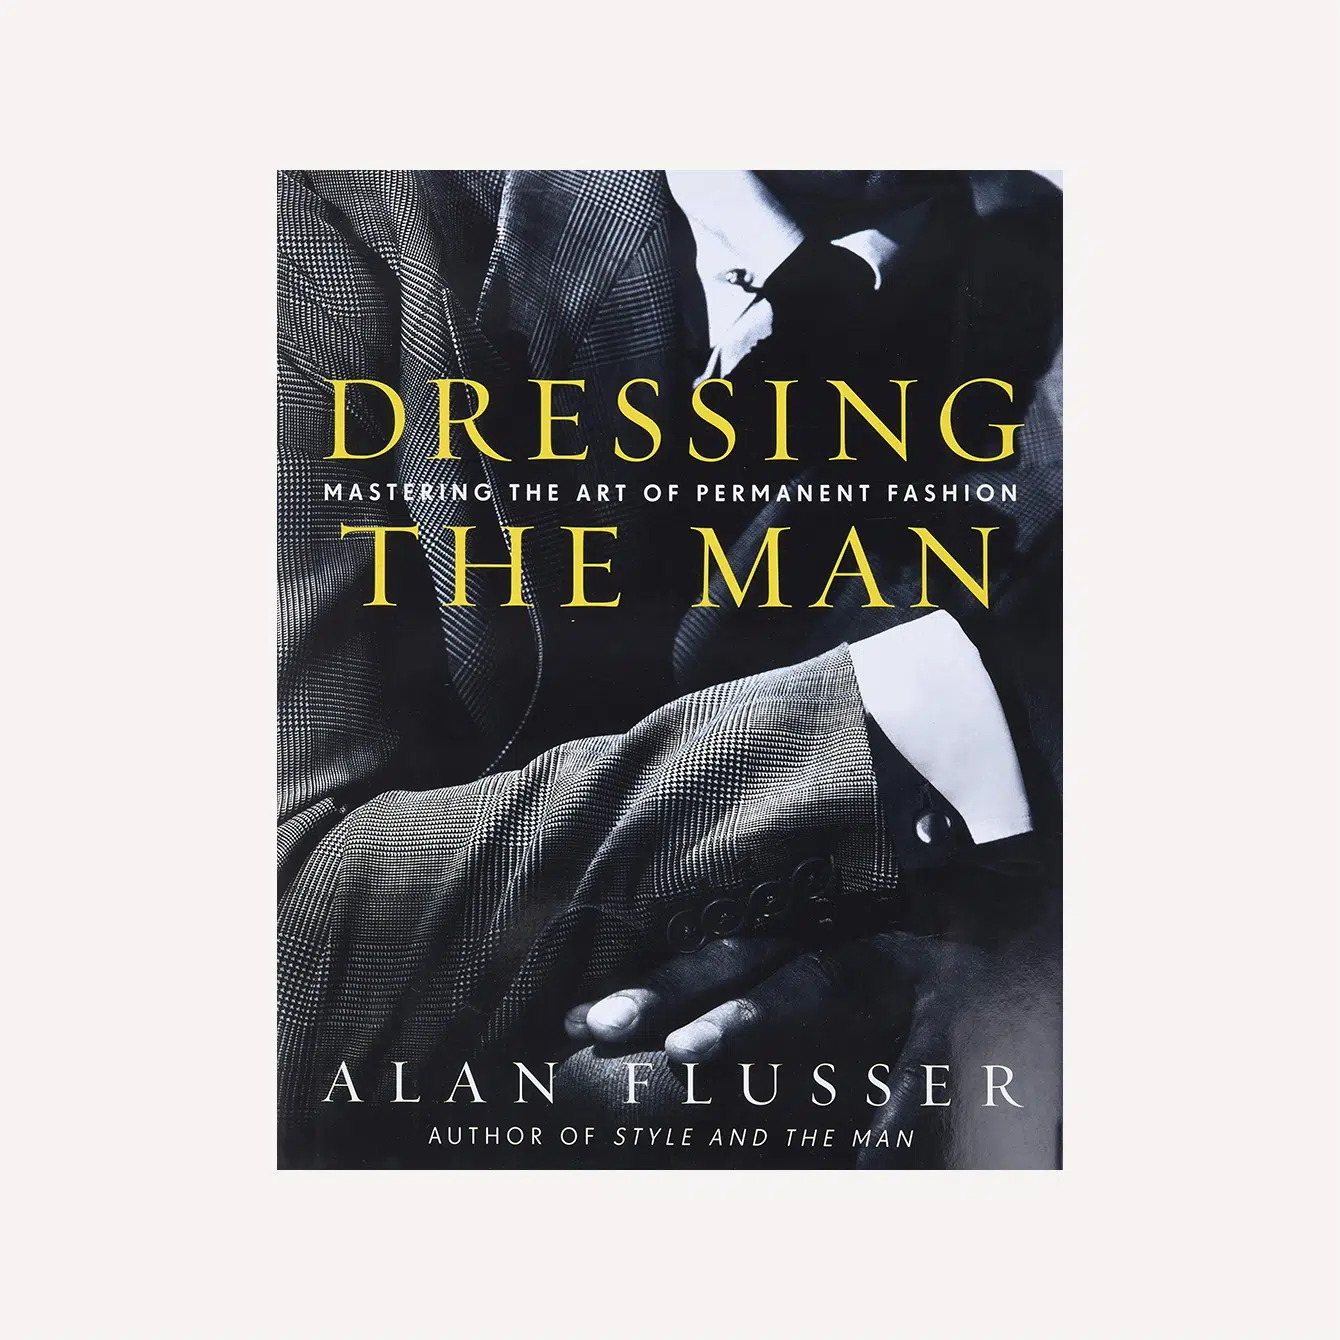 Dressing the Man